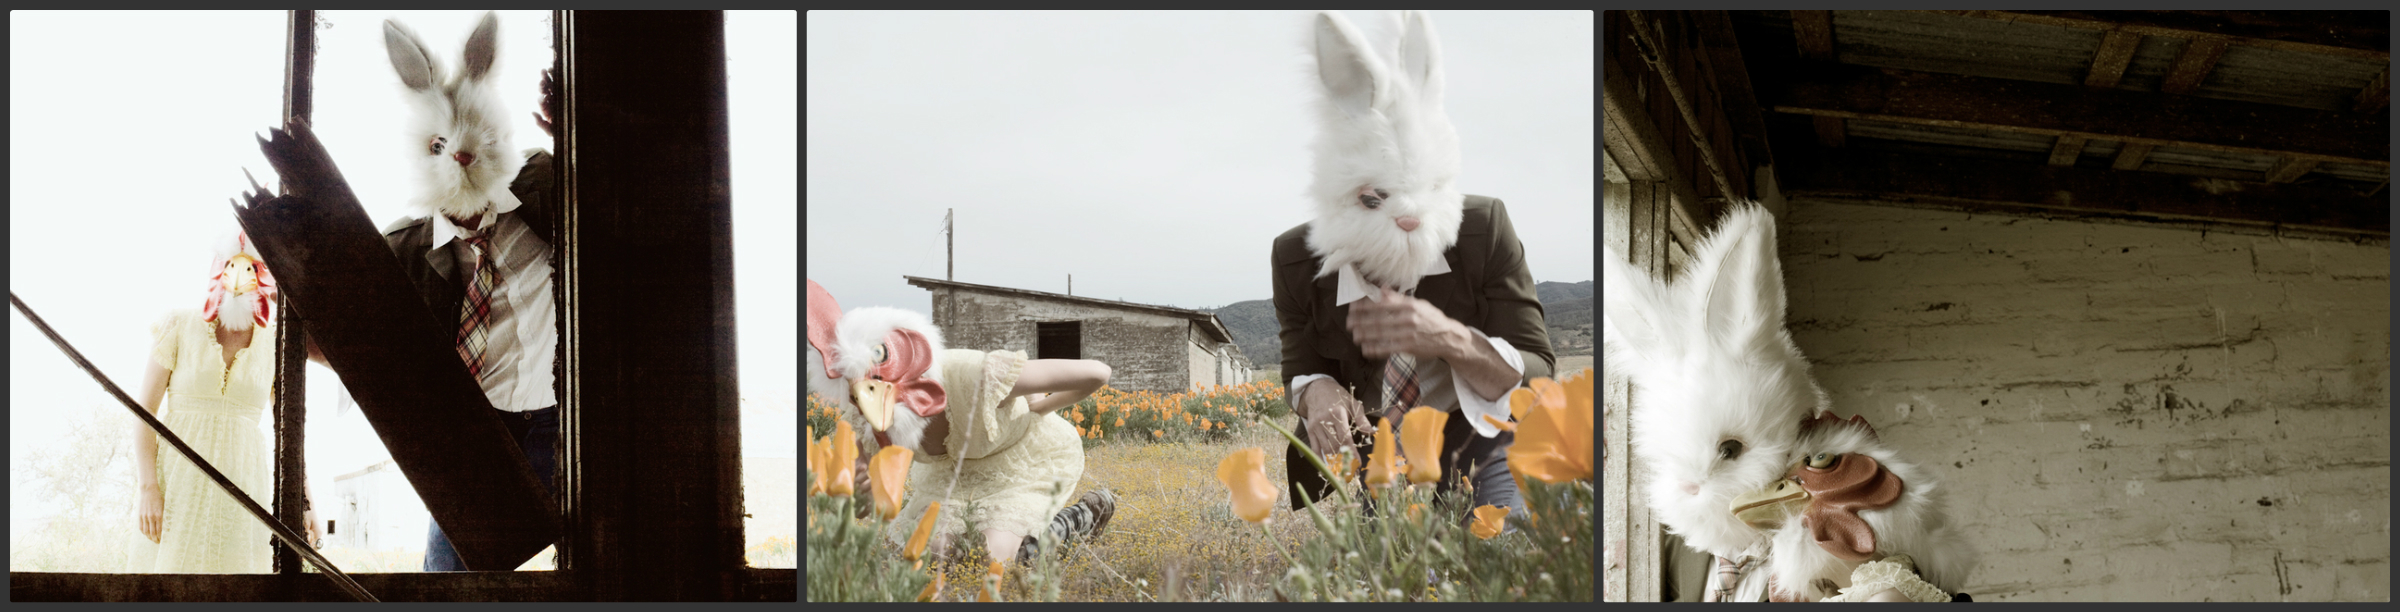 Titan bunny man. Дуглас Гриффин банимен. Банимэн кролик Легенда.